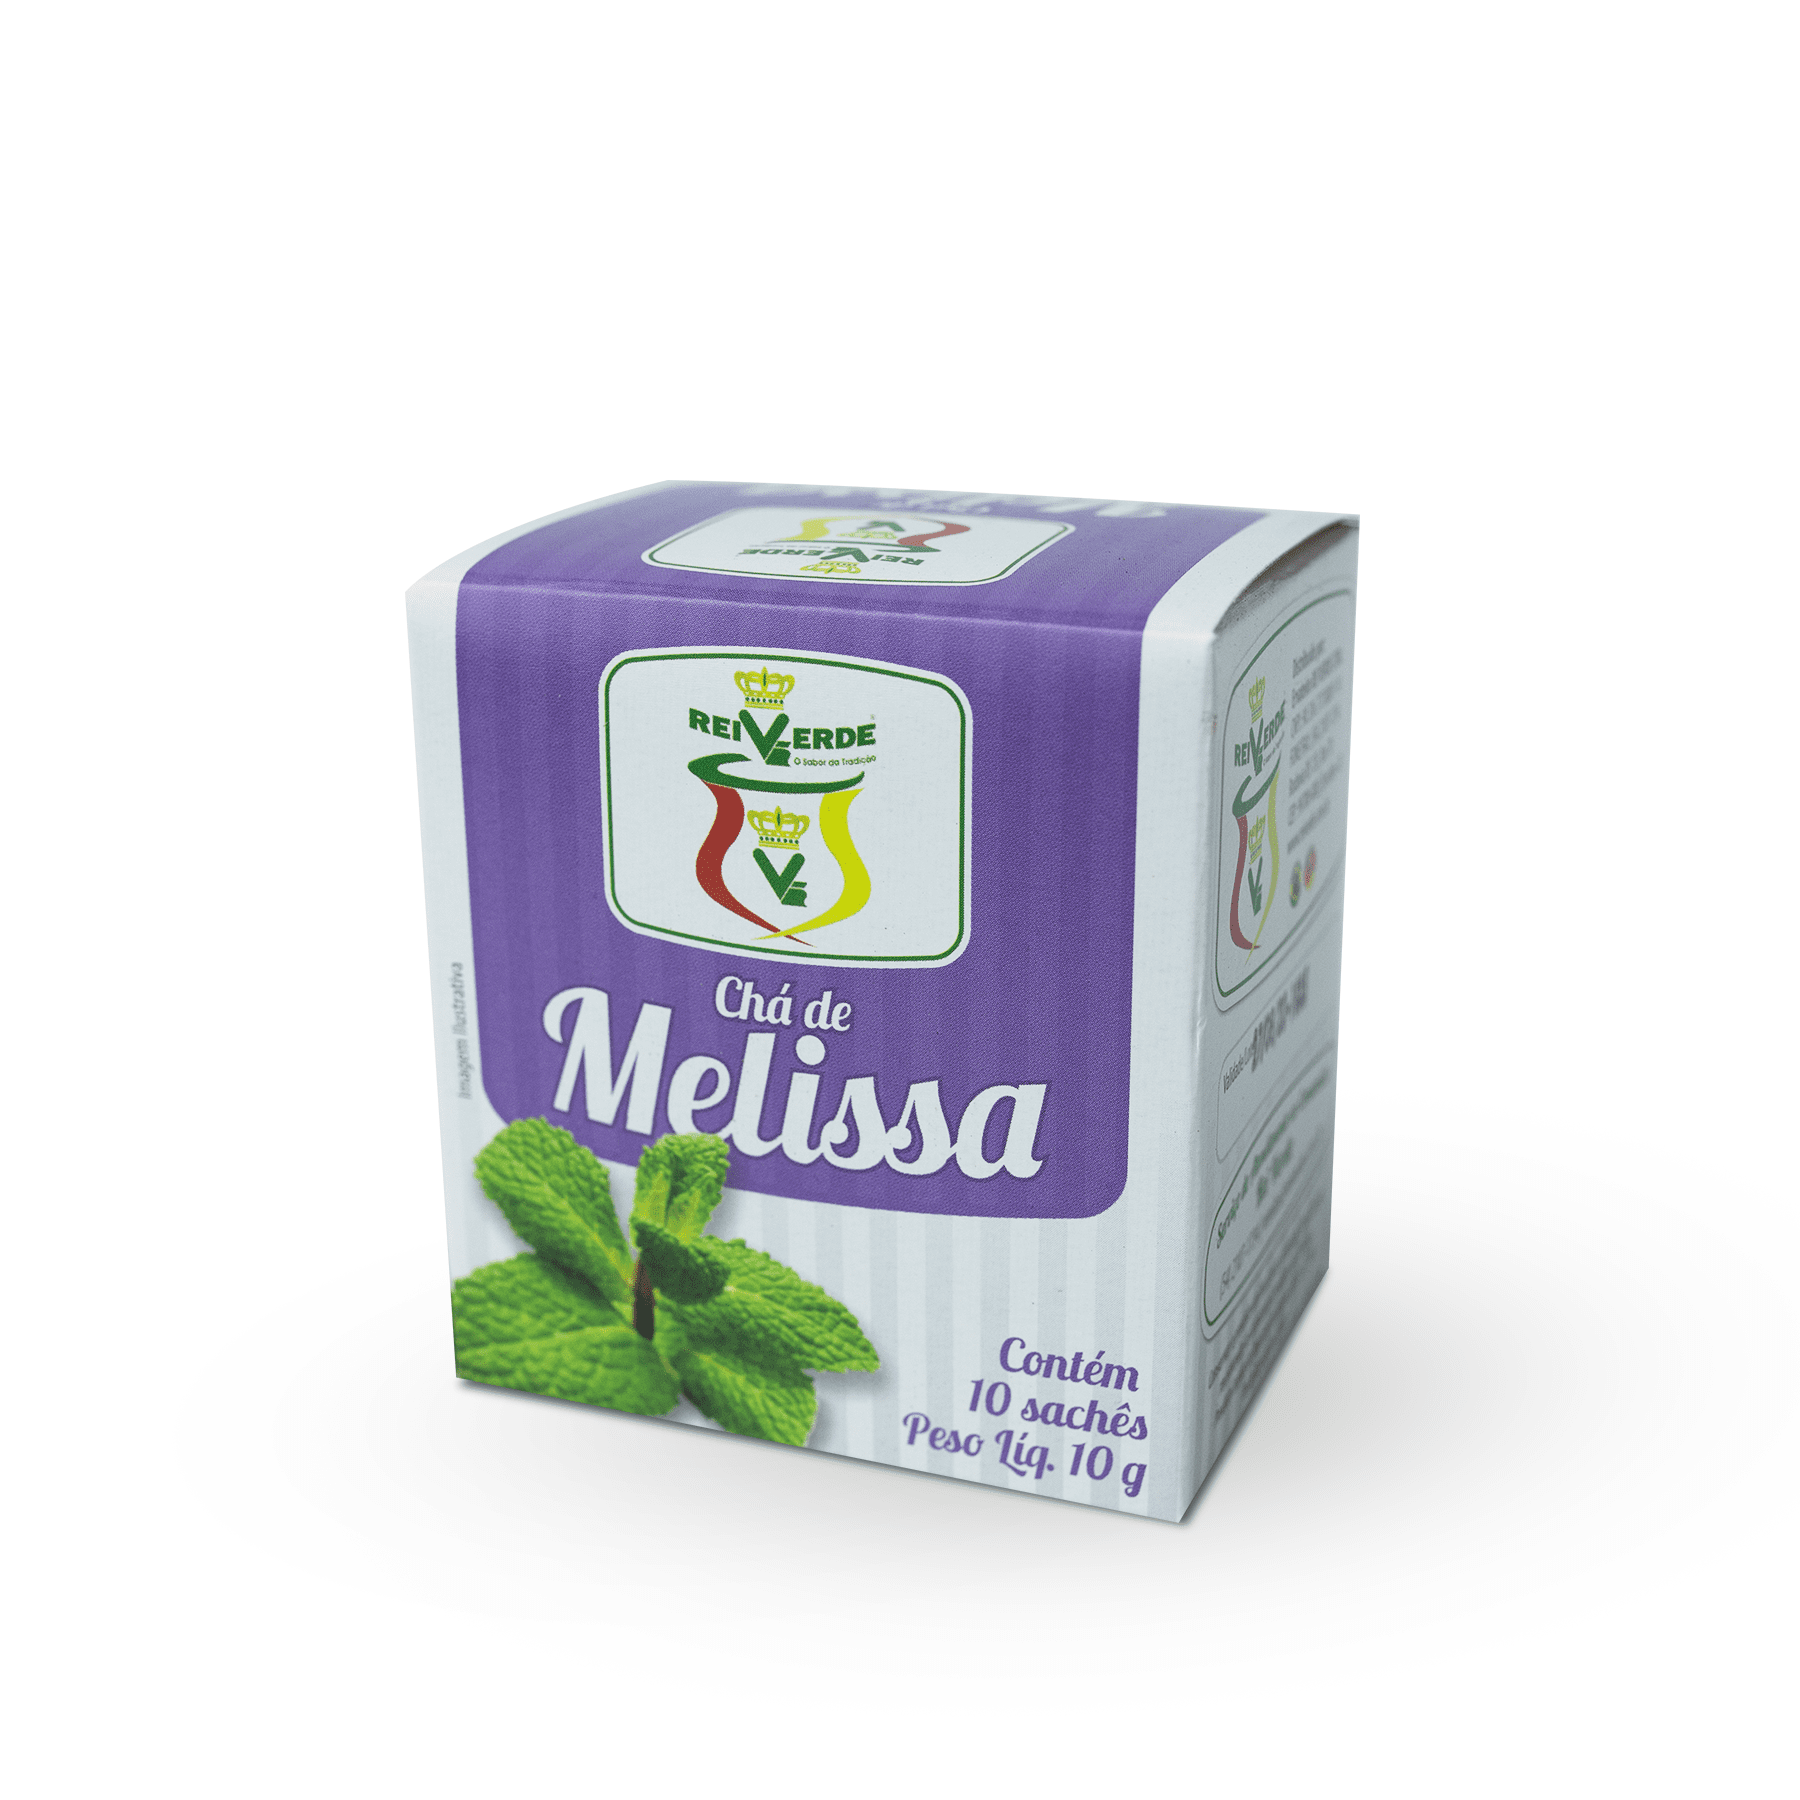 Chá de Melissa